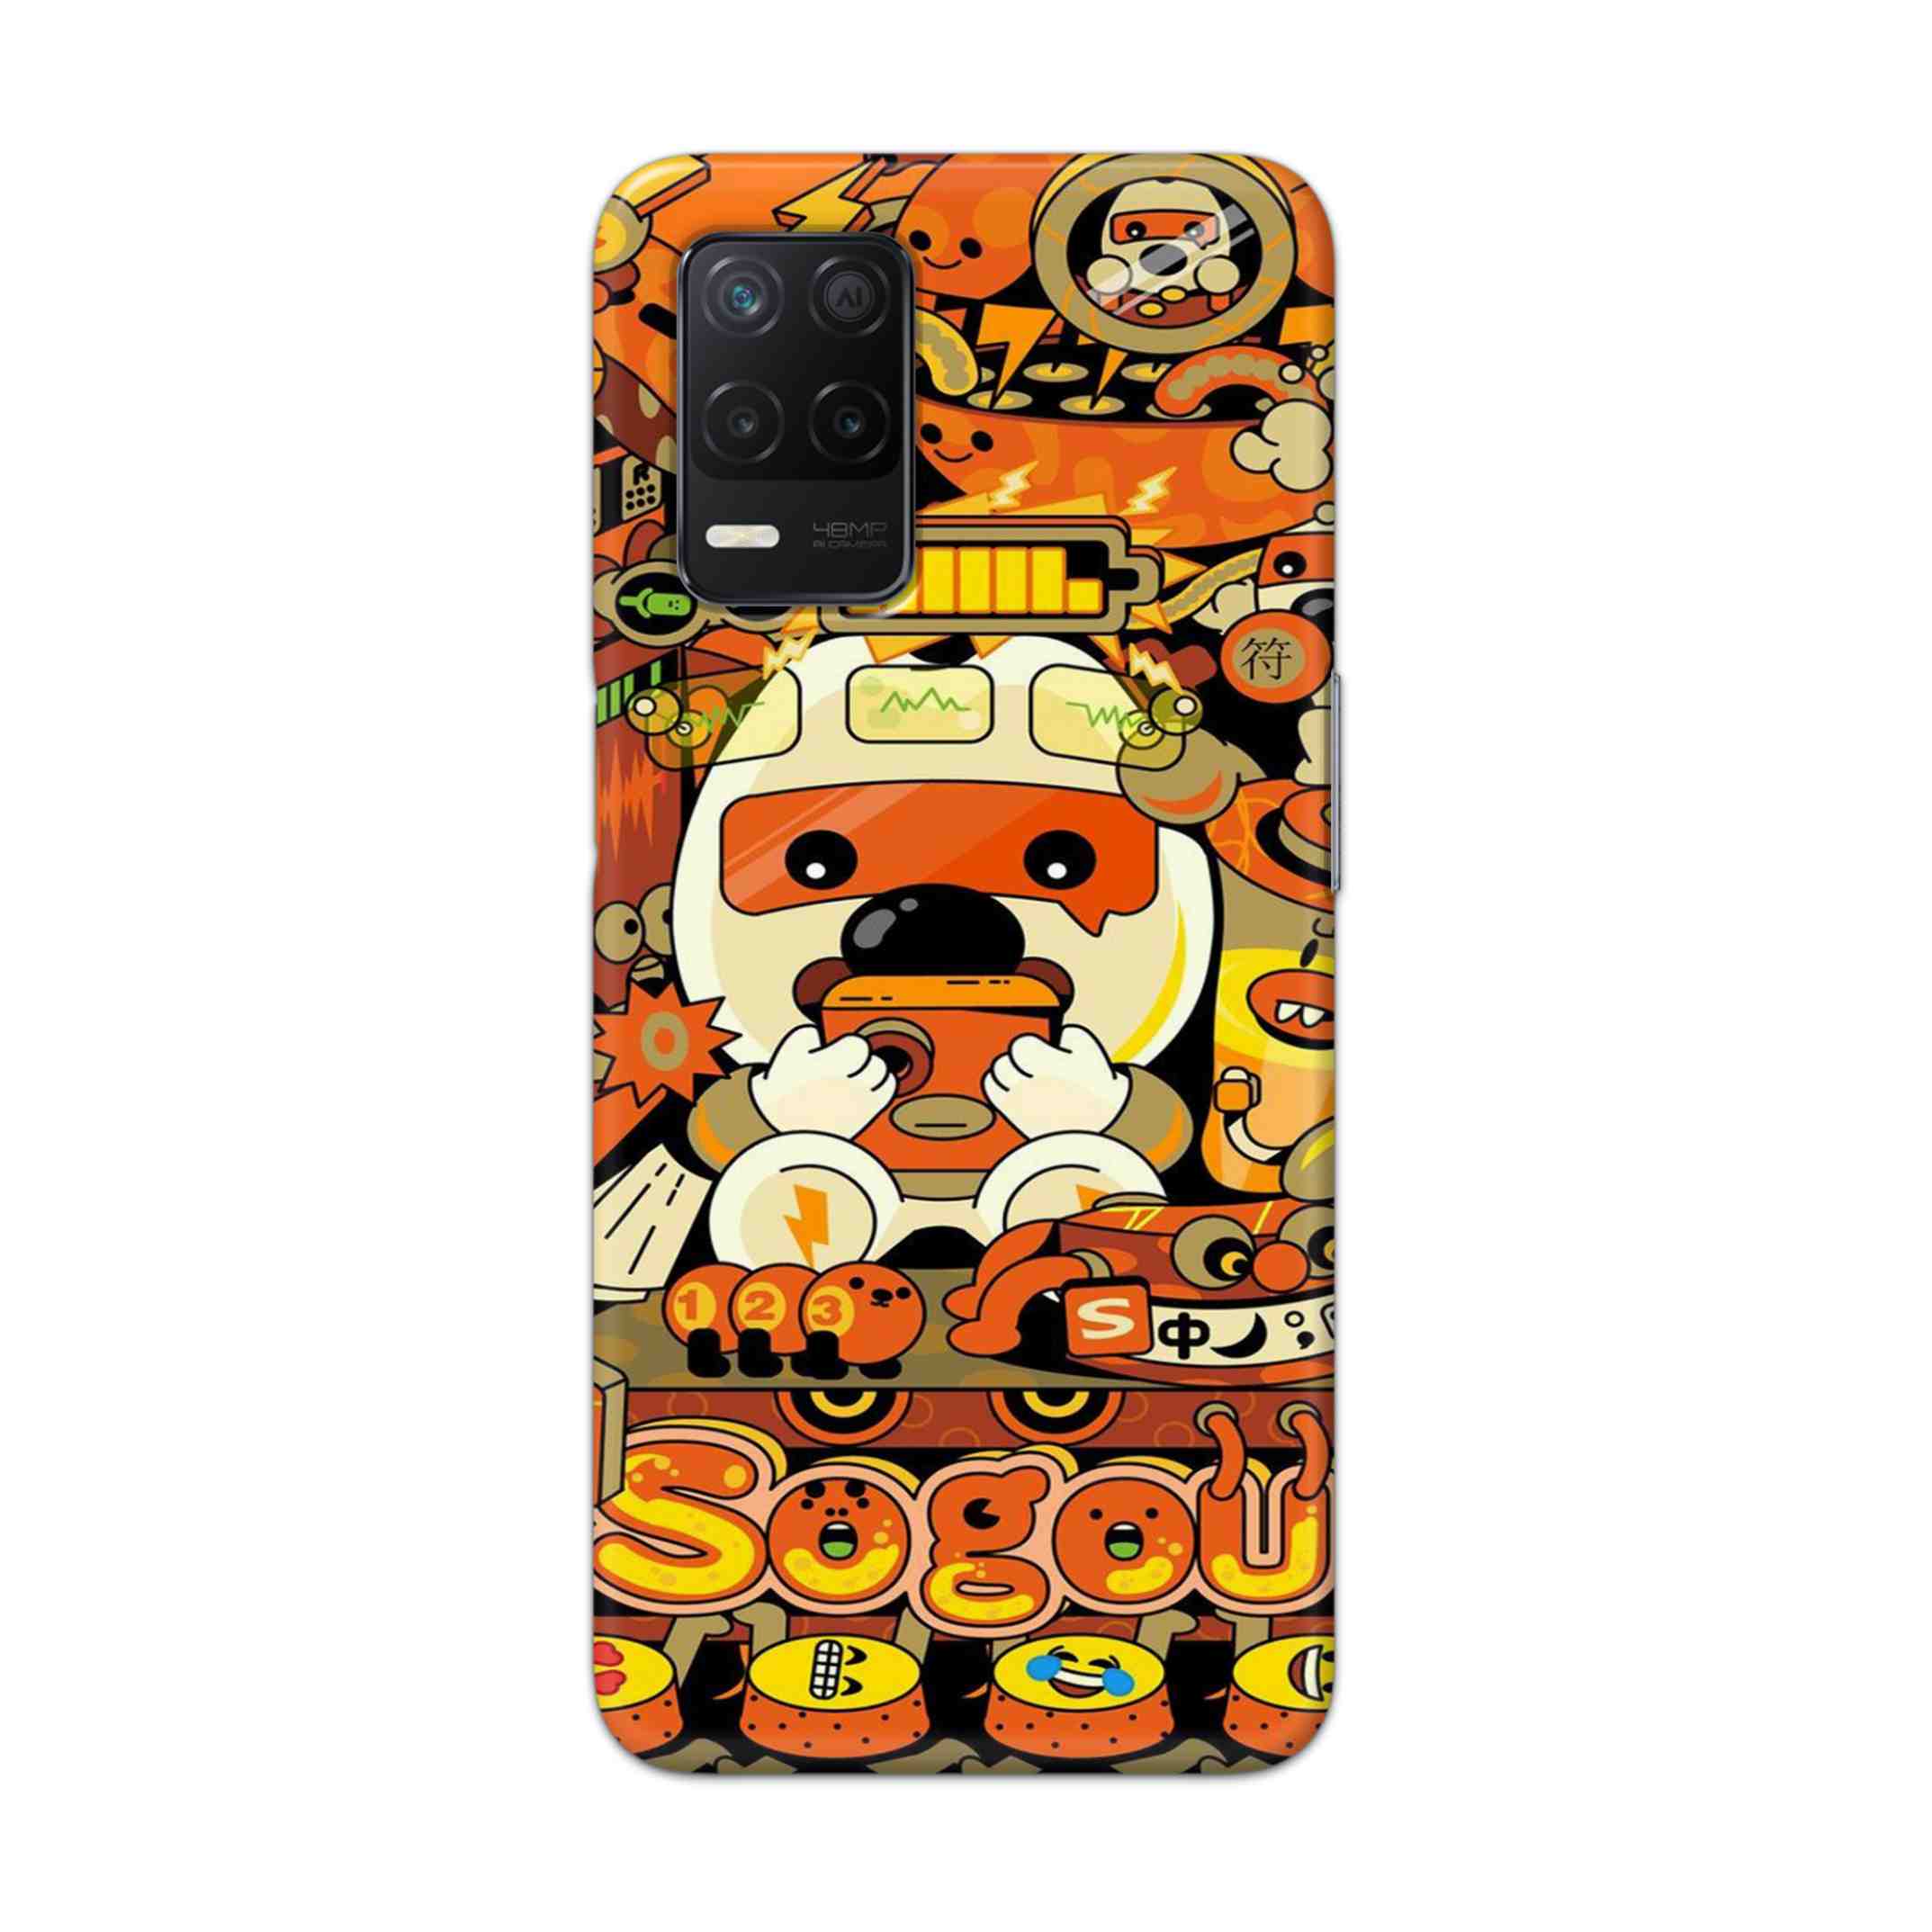 Buy Sogou Hard Back Mobile Phone Case Cover For Realme Narzo 30 5G Online